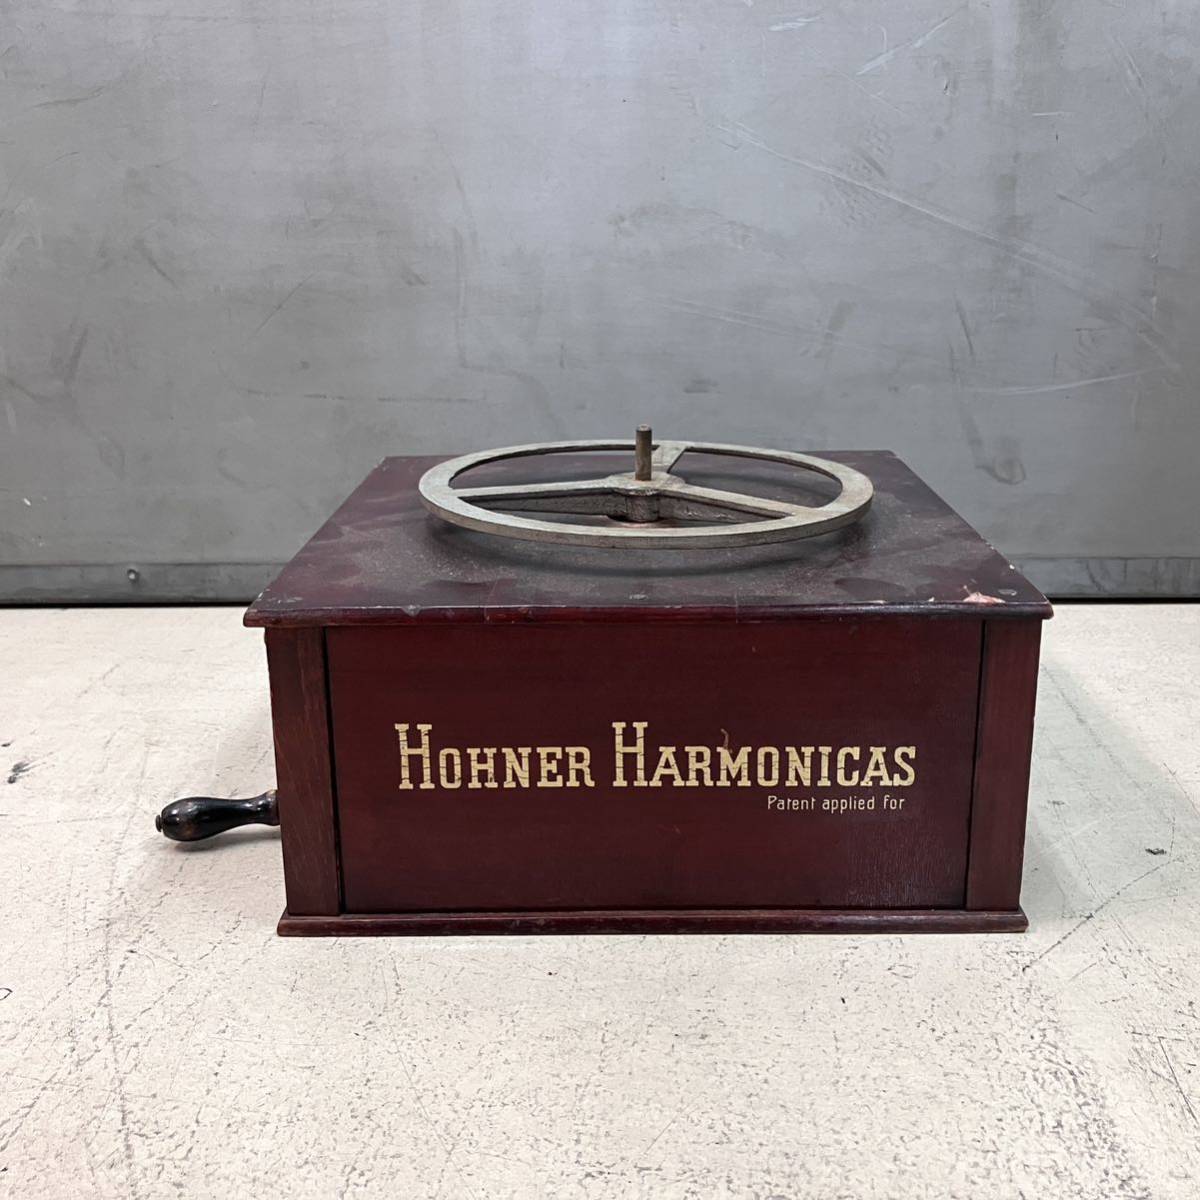 20s アンティーク HOHNER HARMONICAS ハーモニカ 2個付 ディスプレイ 店舗什器 Patent applied for ヴィンテージ vuz0205_画像8